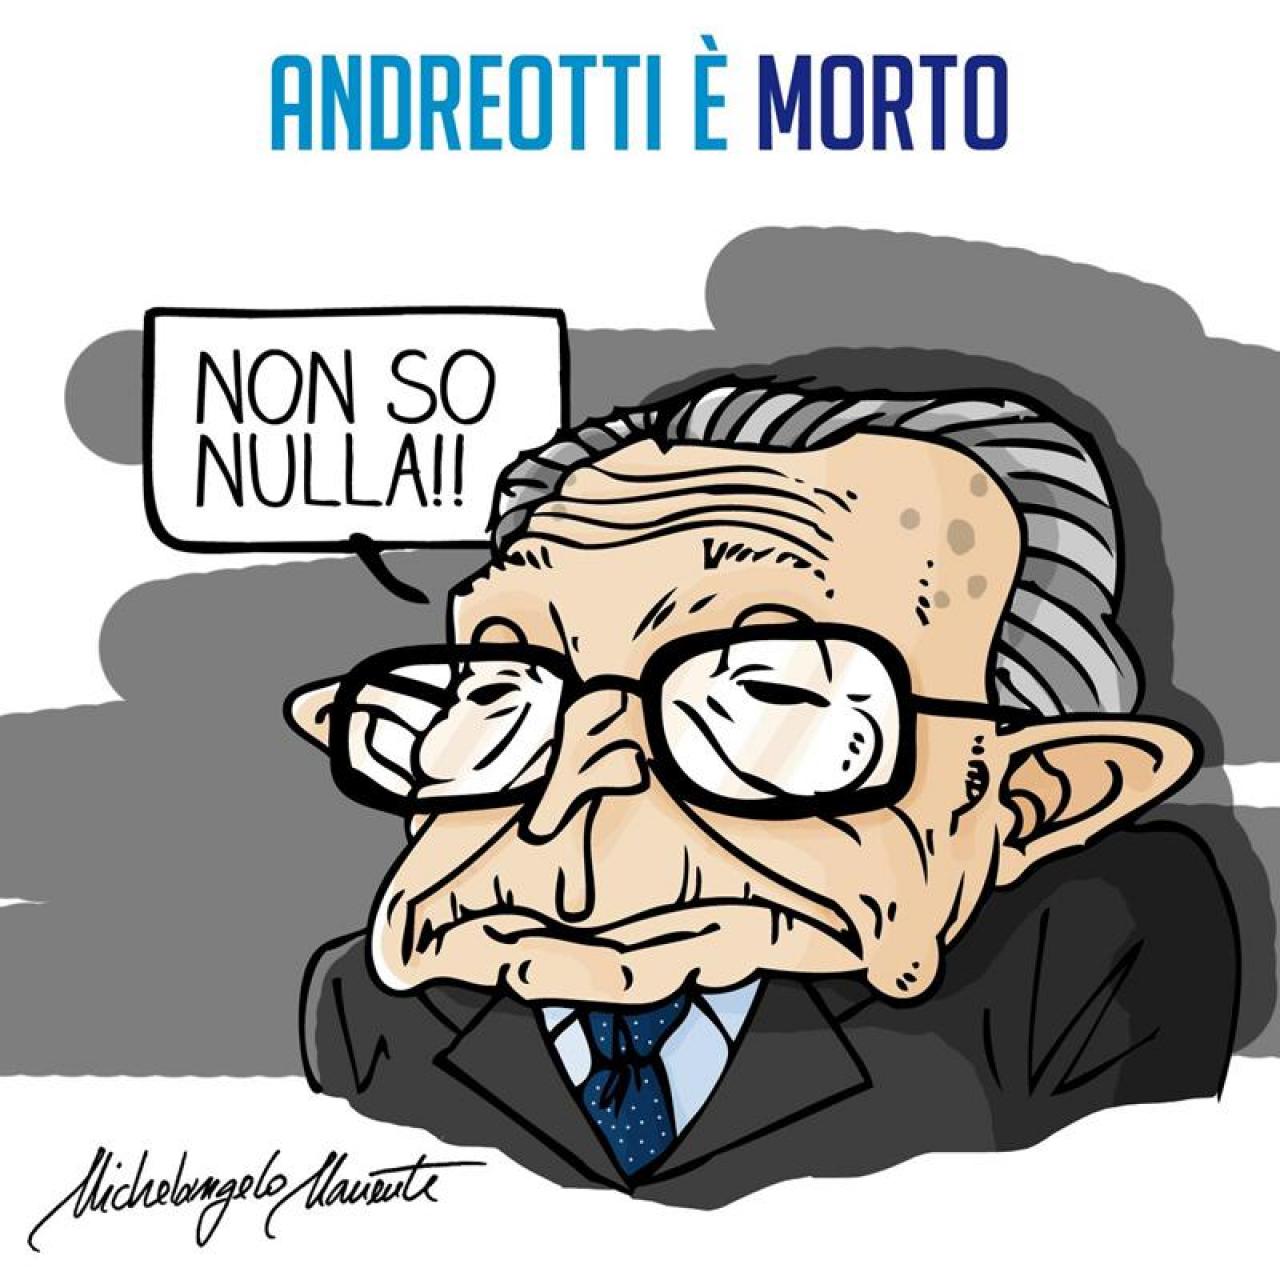 Michelangelo Manente - Andreotti